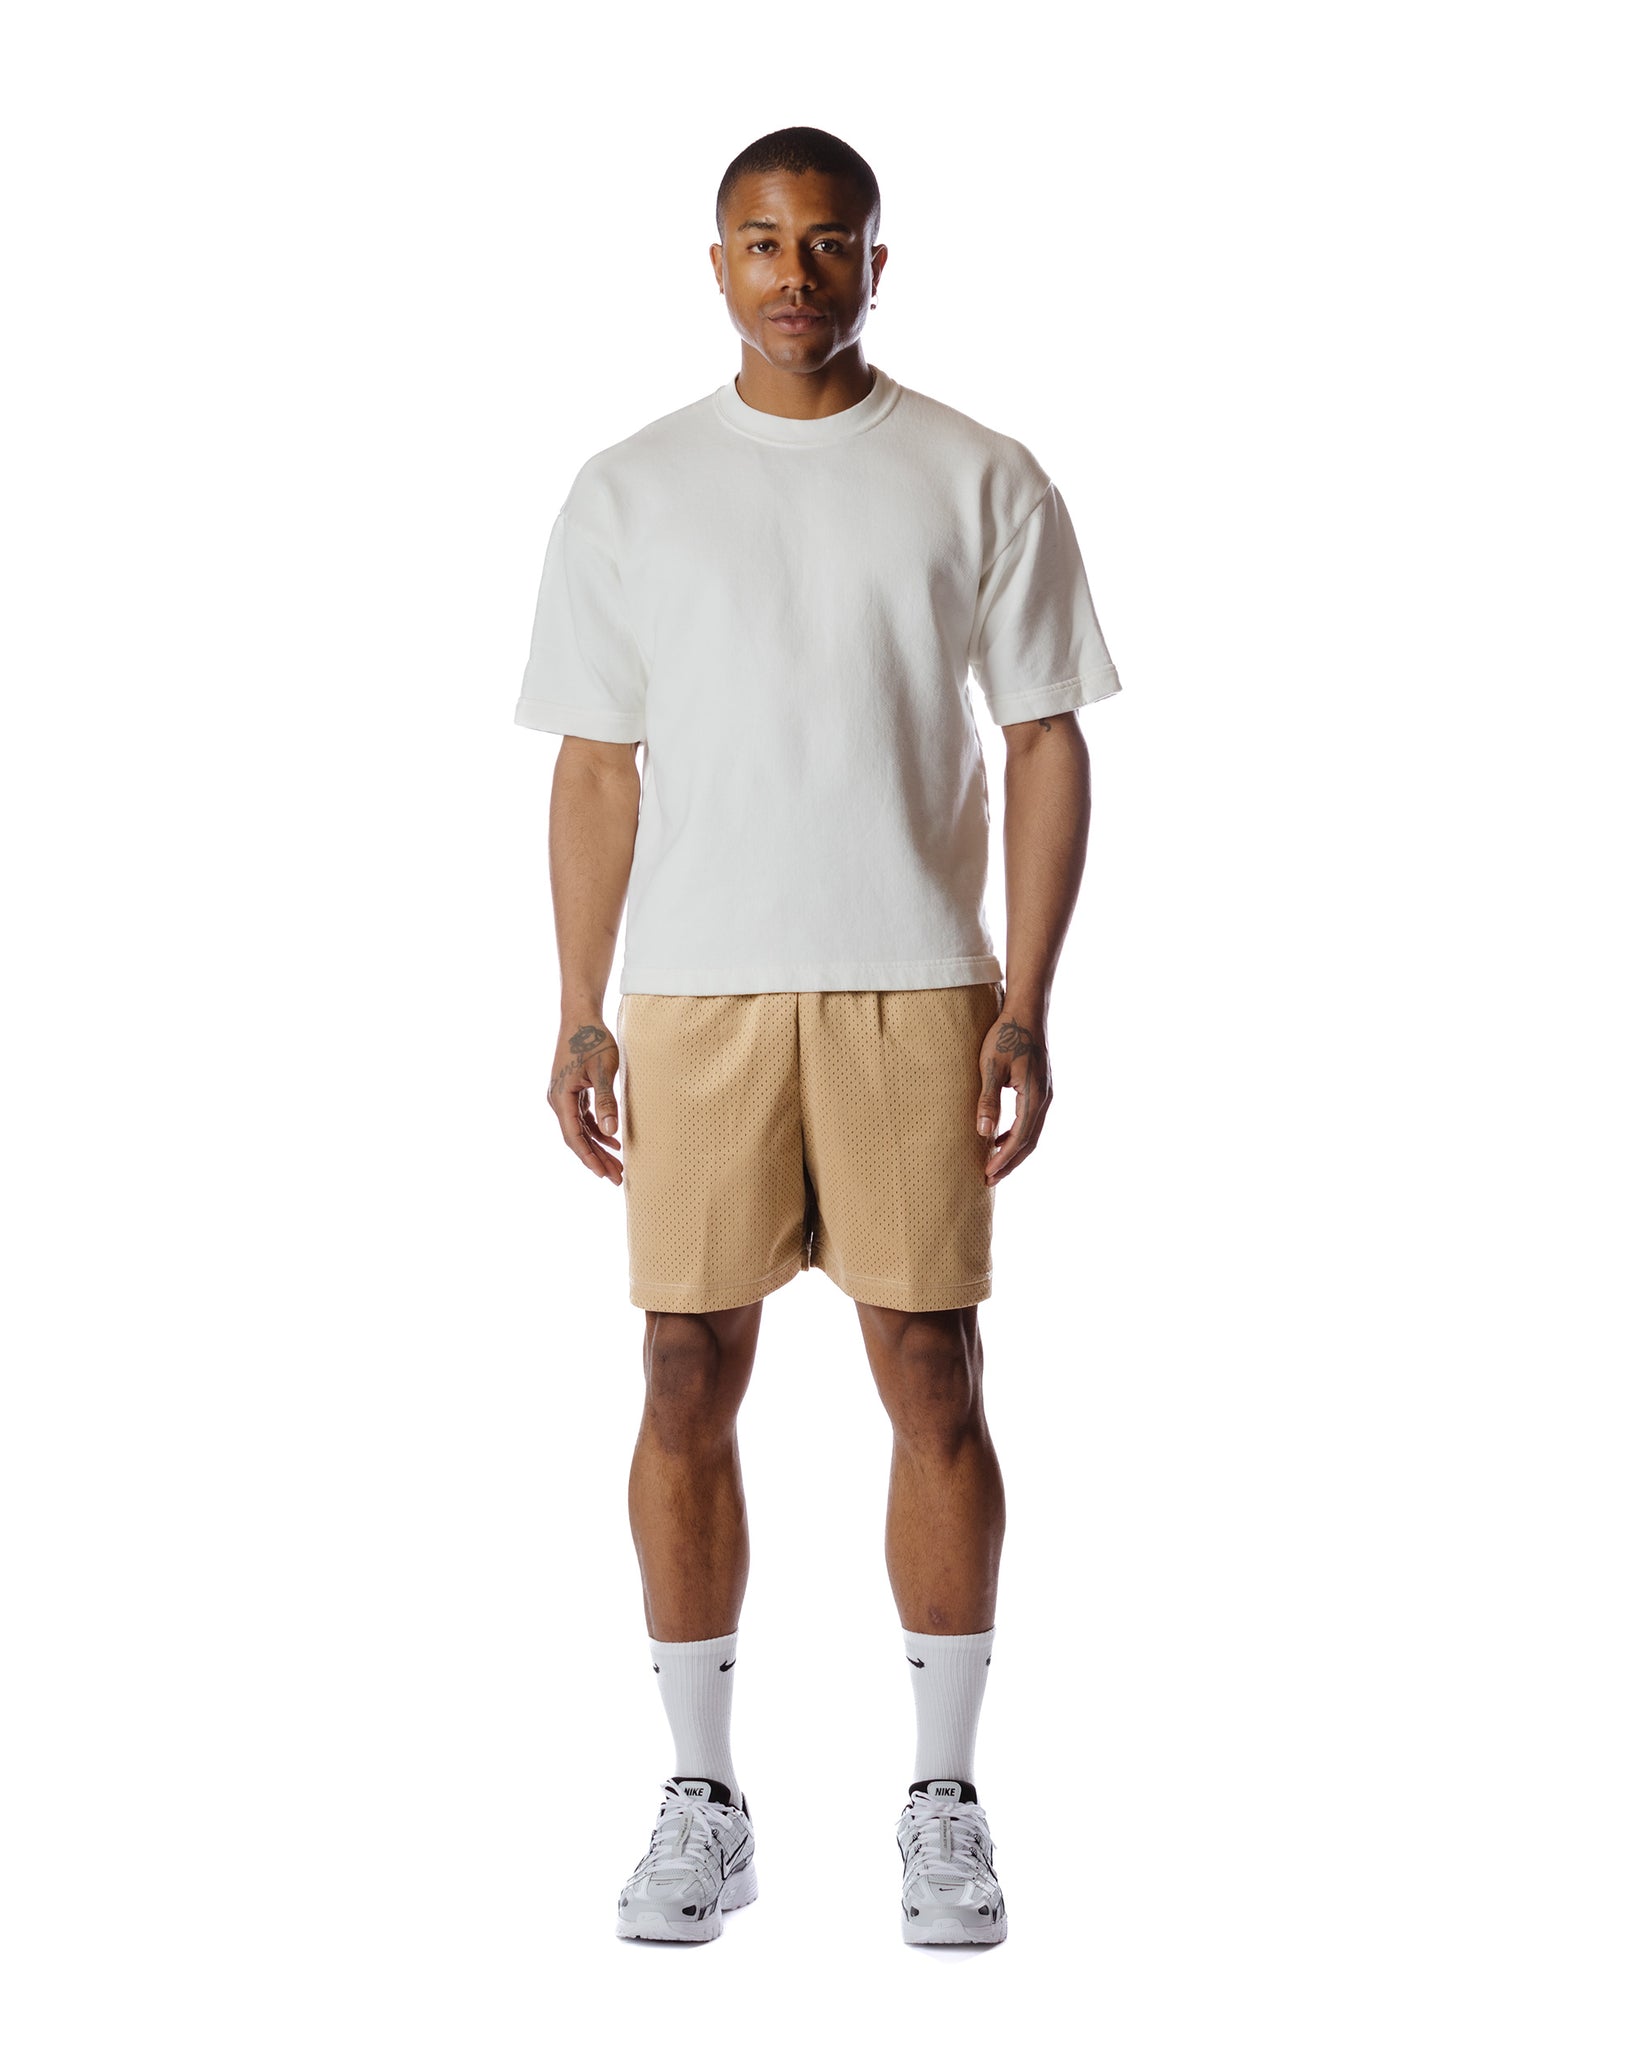 Nike Sportswear Authentics Mesh Shorts Khaki Model